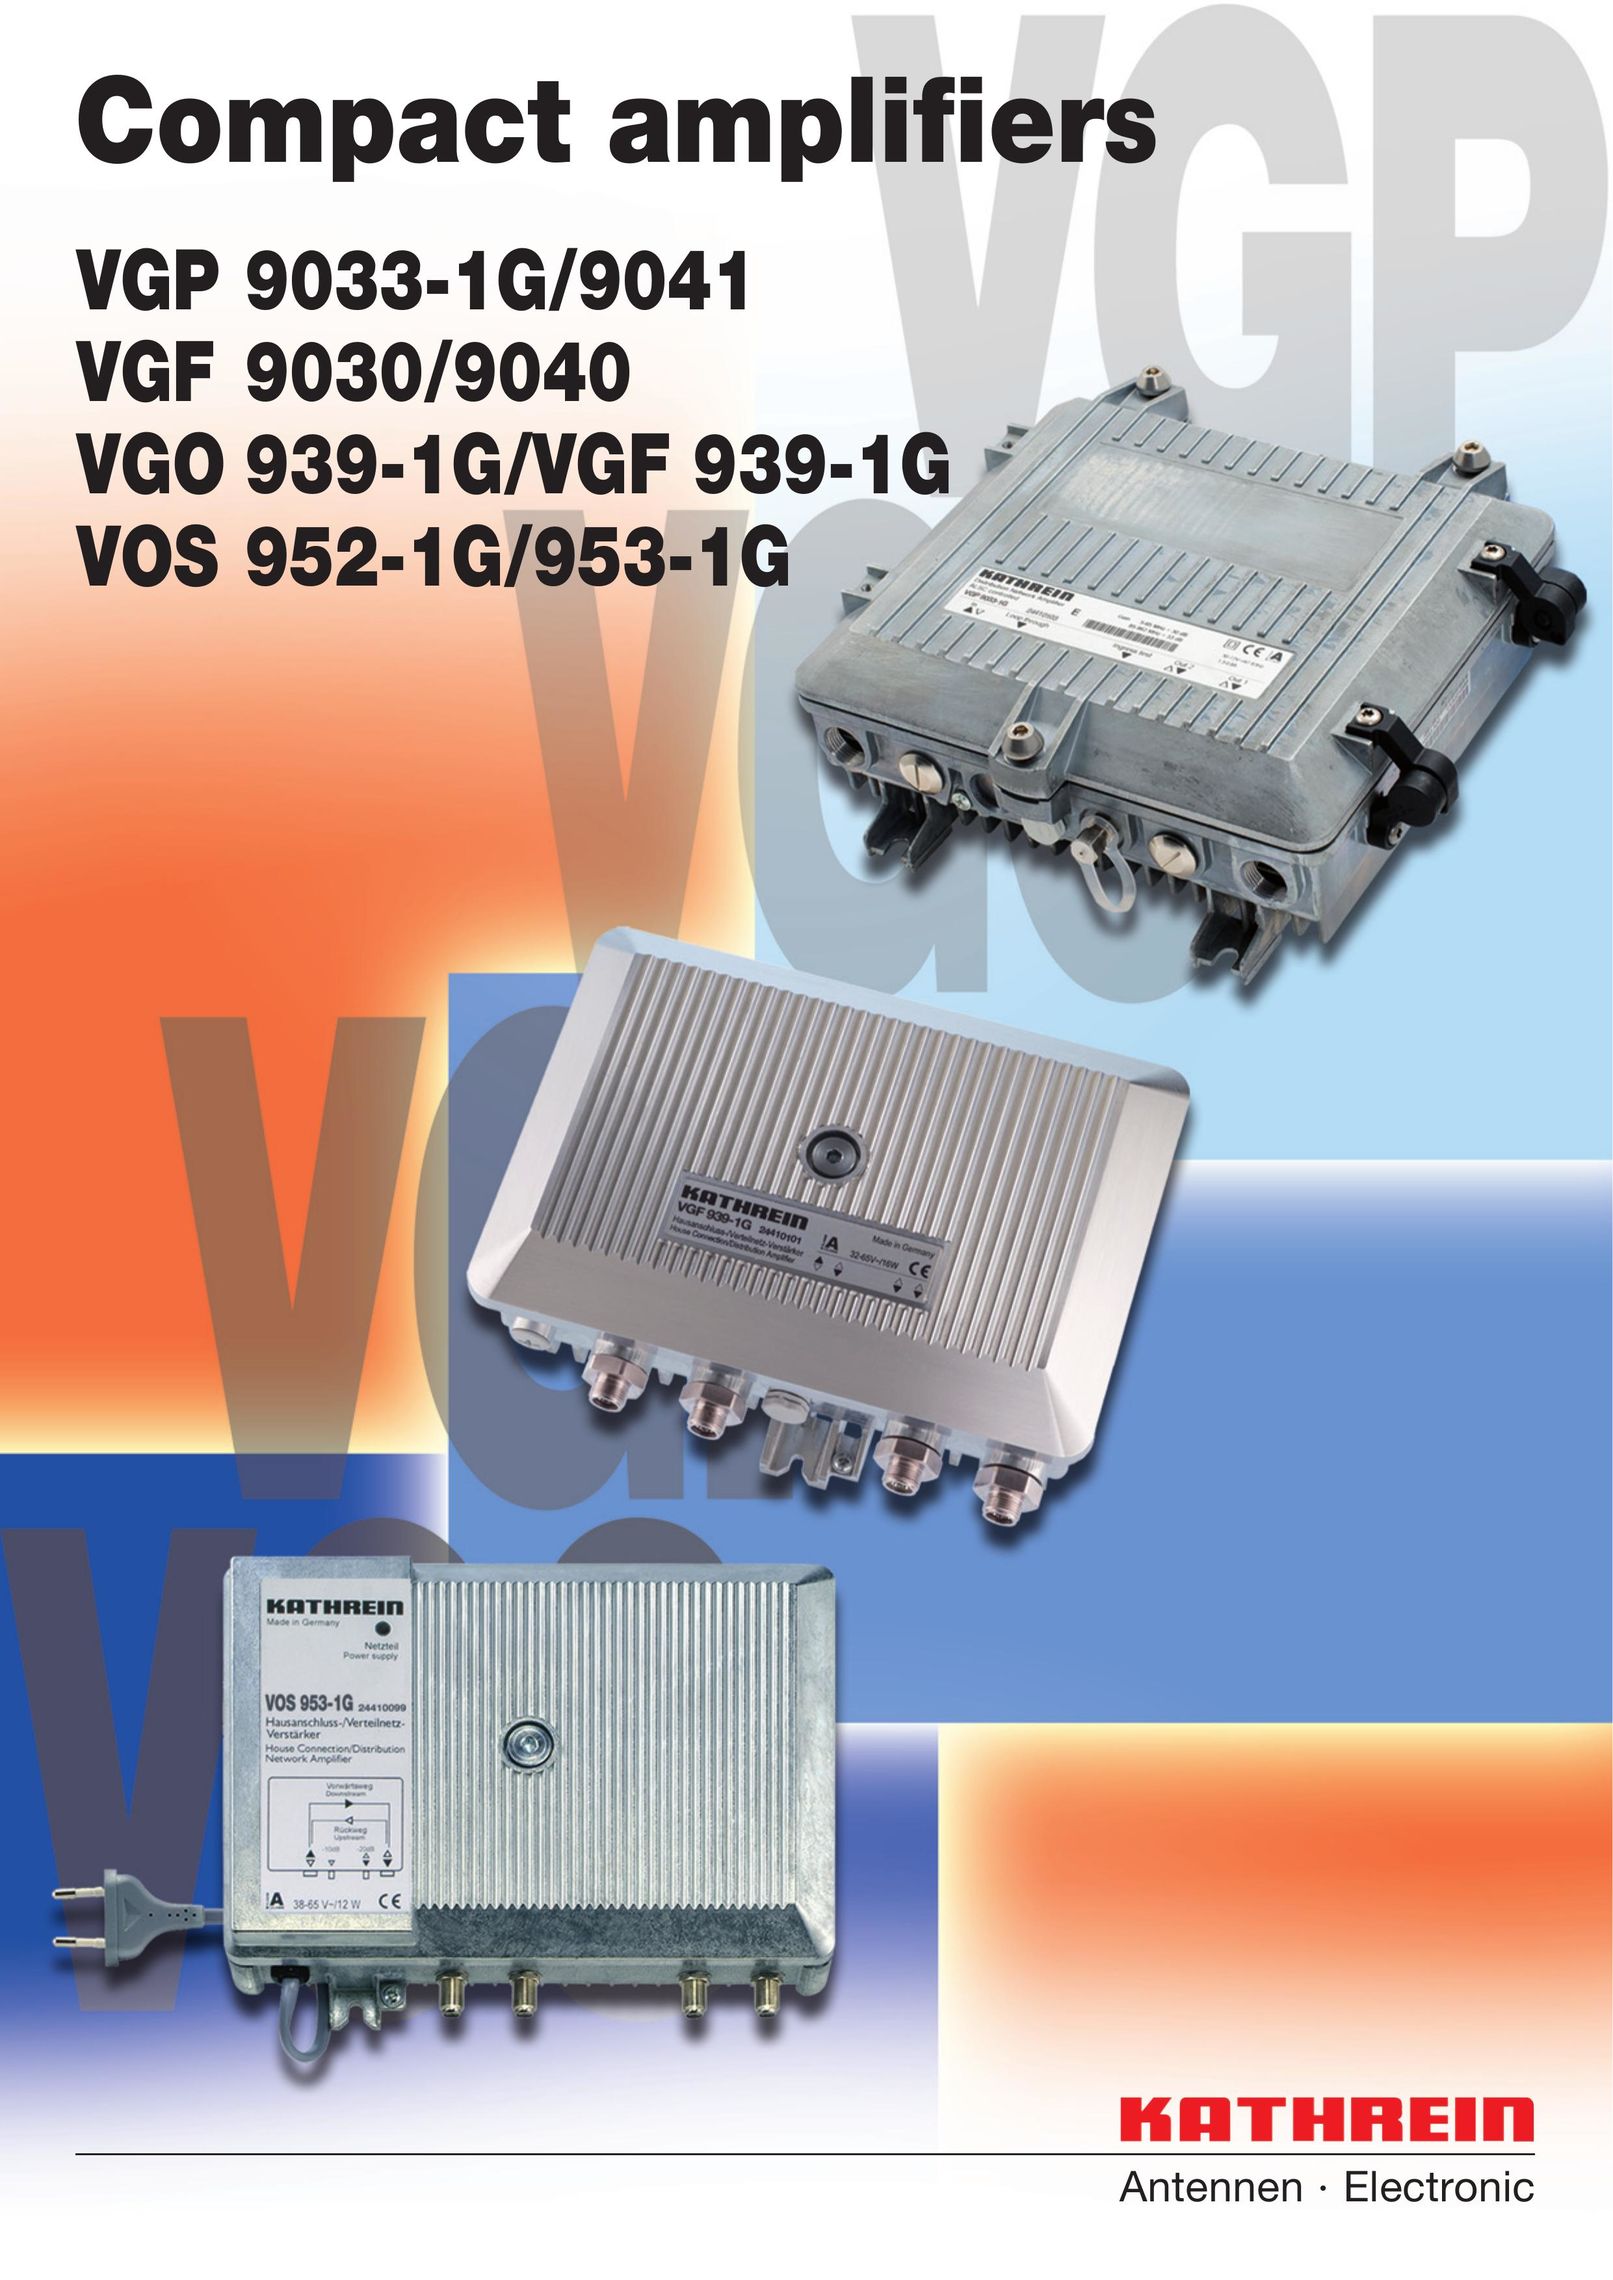 Kathrein VOS 952-1G/953-1G Car Amplifier User Manual